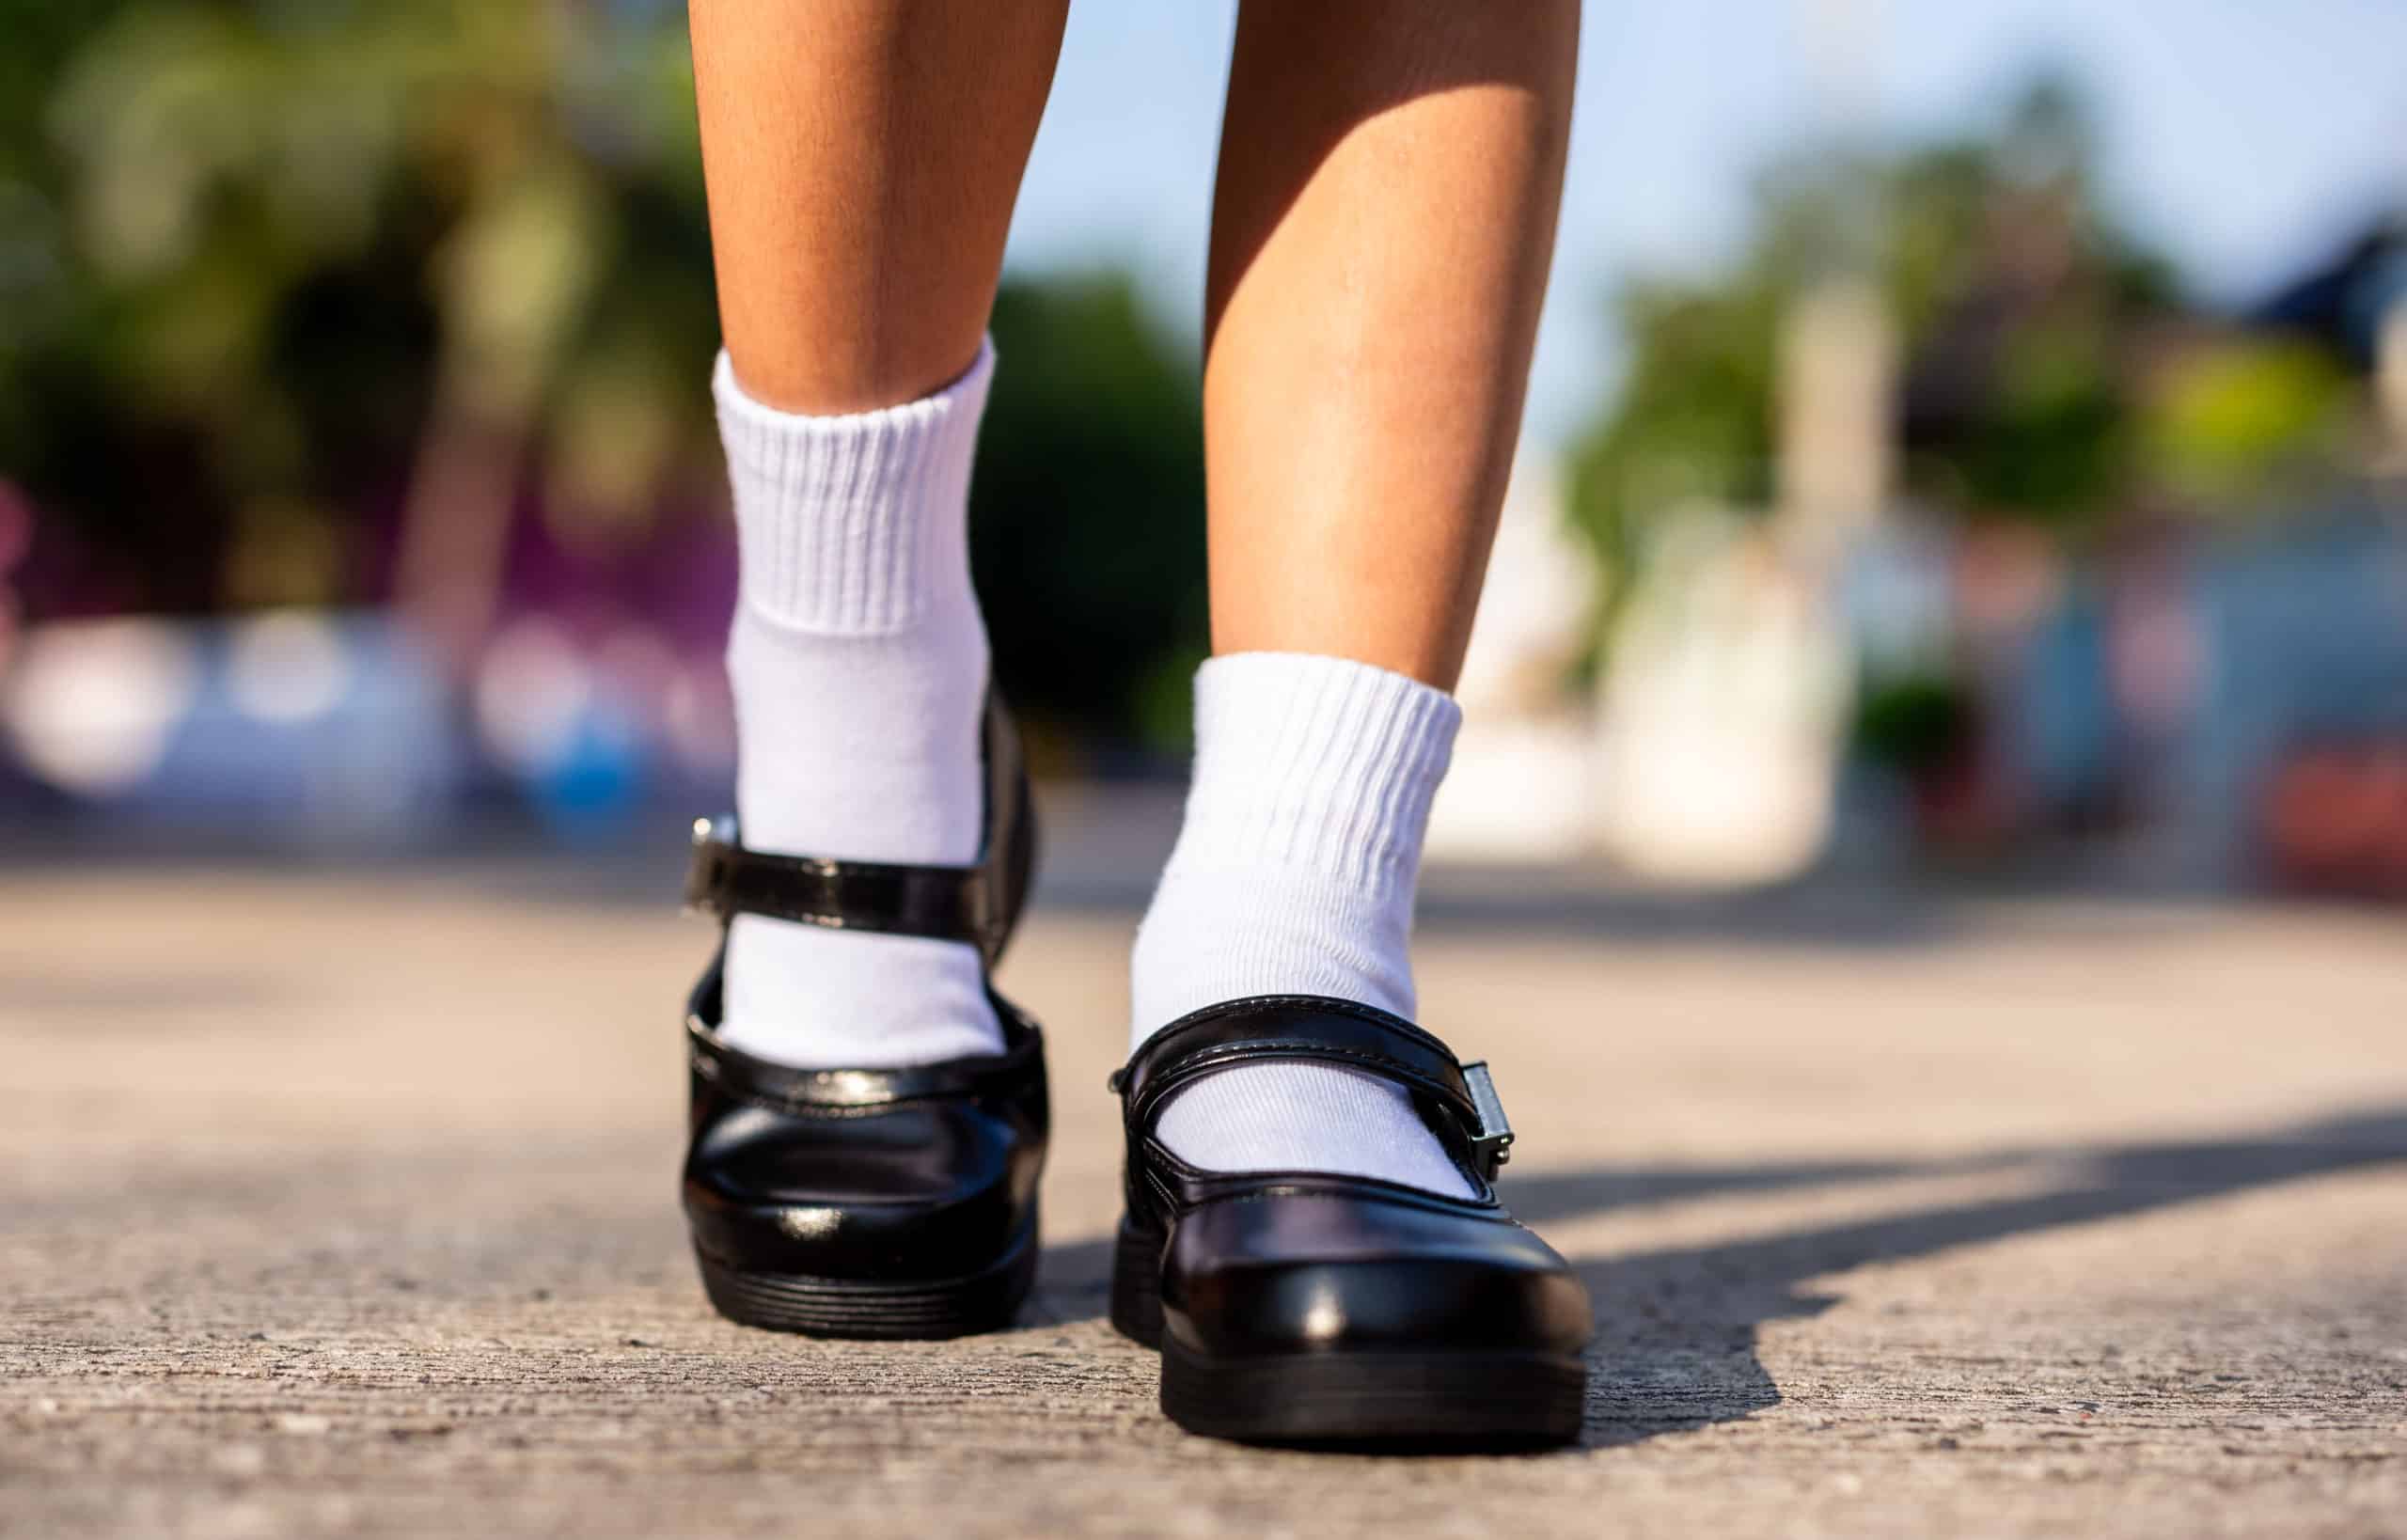 Students feet. Разная обувь на ногах мода. Босоножки белые пешеход шуз. Skate Shoes on Leg. School Shoes.